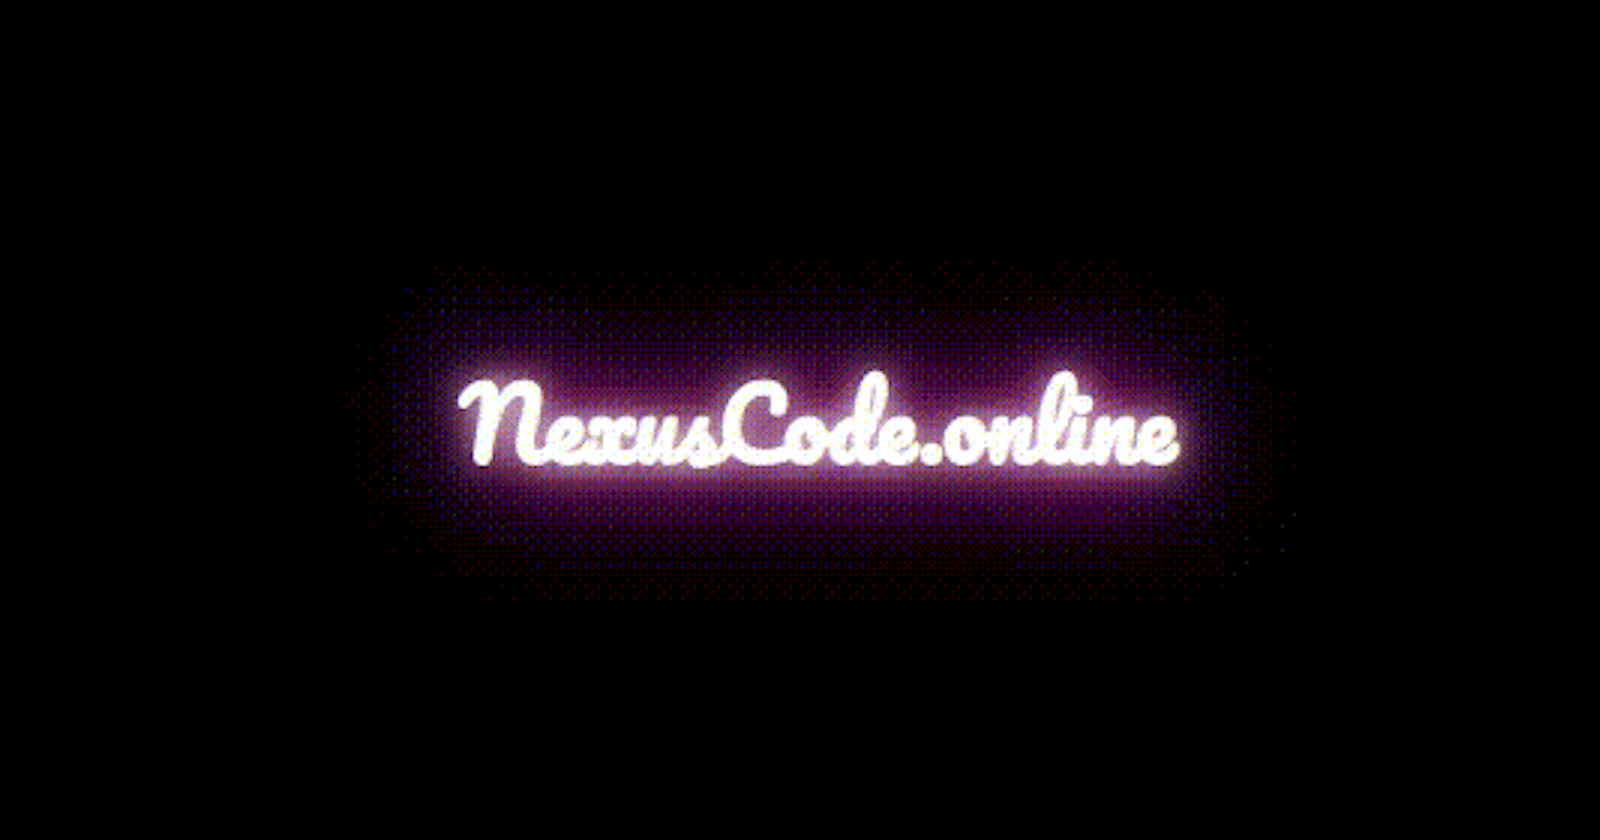 How to create neon text using vanilla CSS